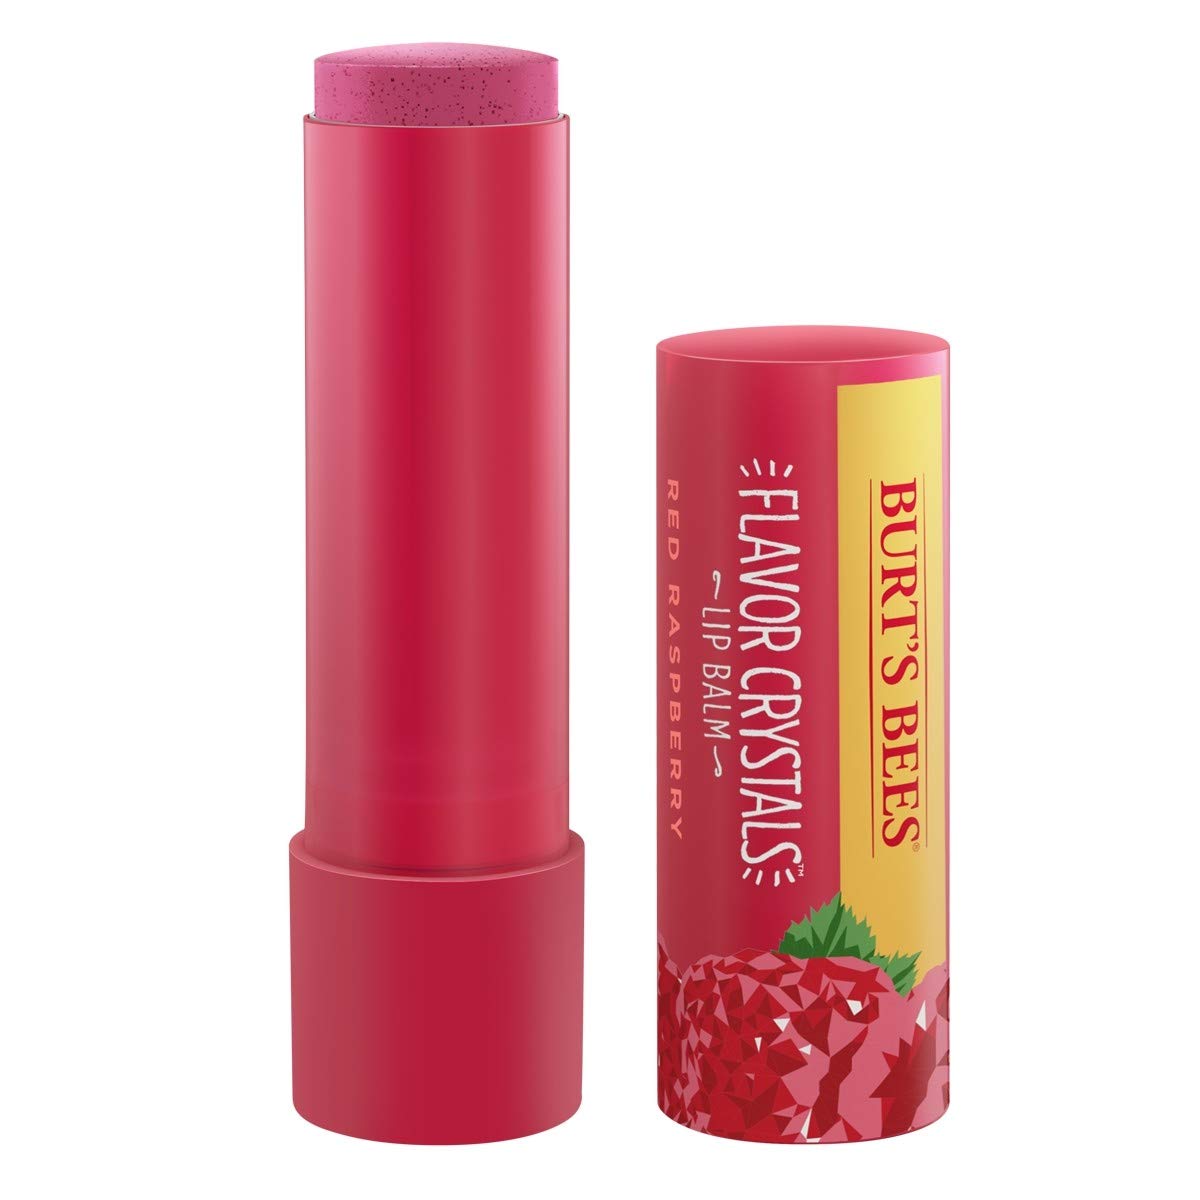 Burt's Bees 100% Natural Moisturizing Lipstick, Iced Iris, 1 Tube